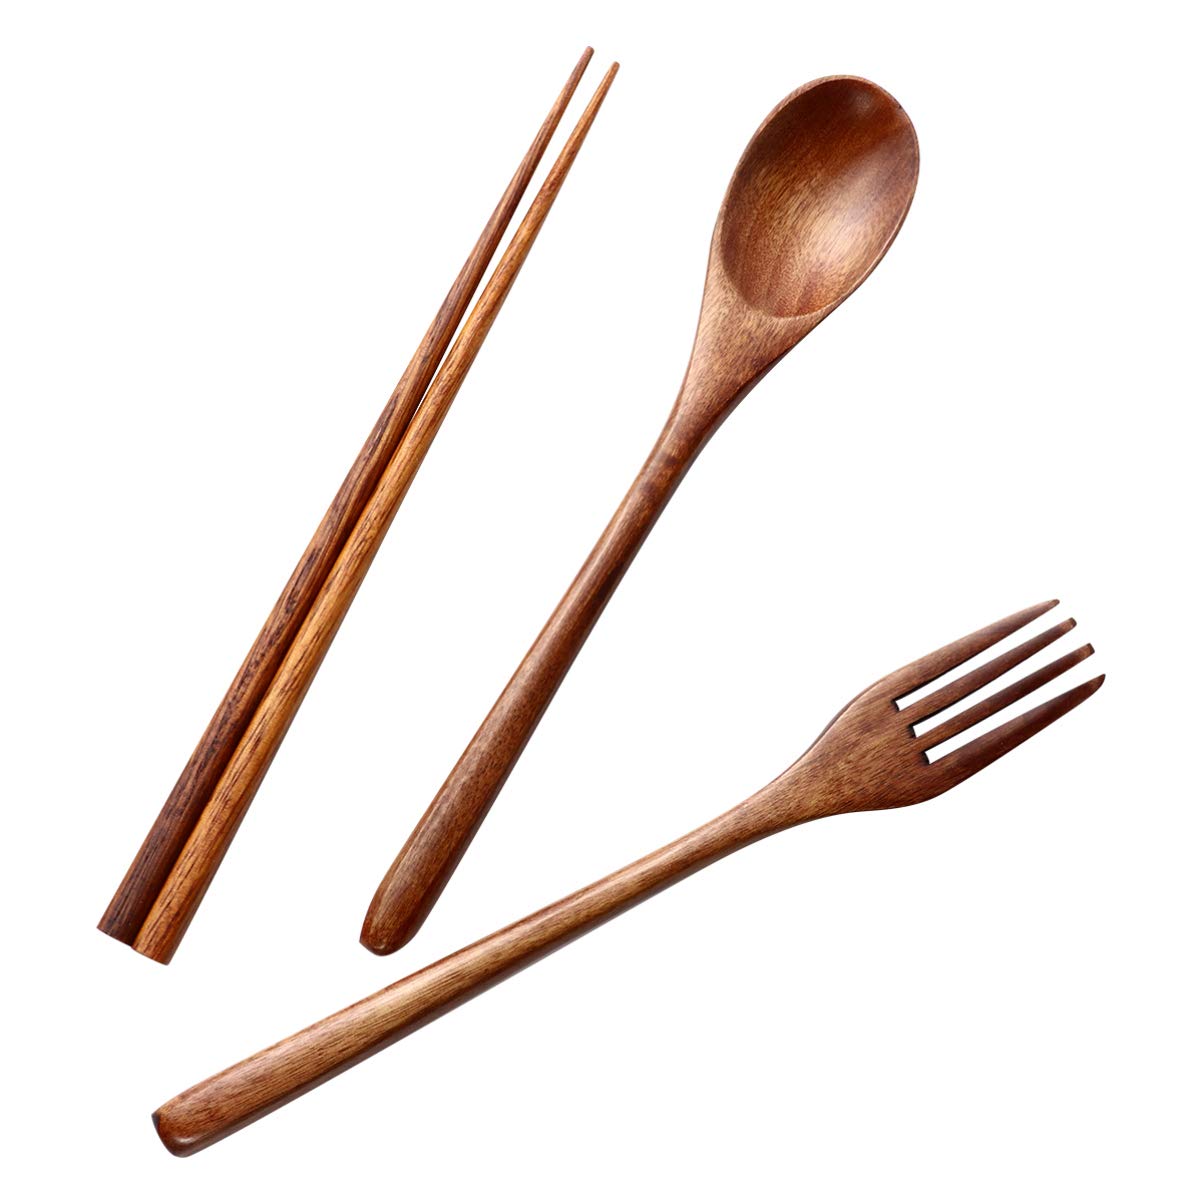 Hemoton 6 Pcs Wooden Flatware Tableware Cutlery Set Travel Utensils Wooden Fork Spoon Chopsticks Reusable Flatware Utensils for Kitchen Dinning Table